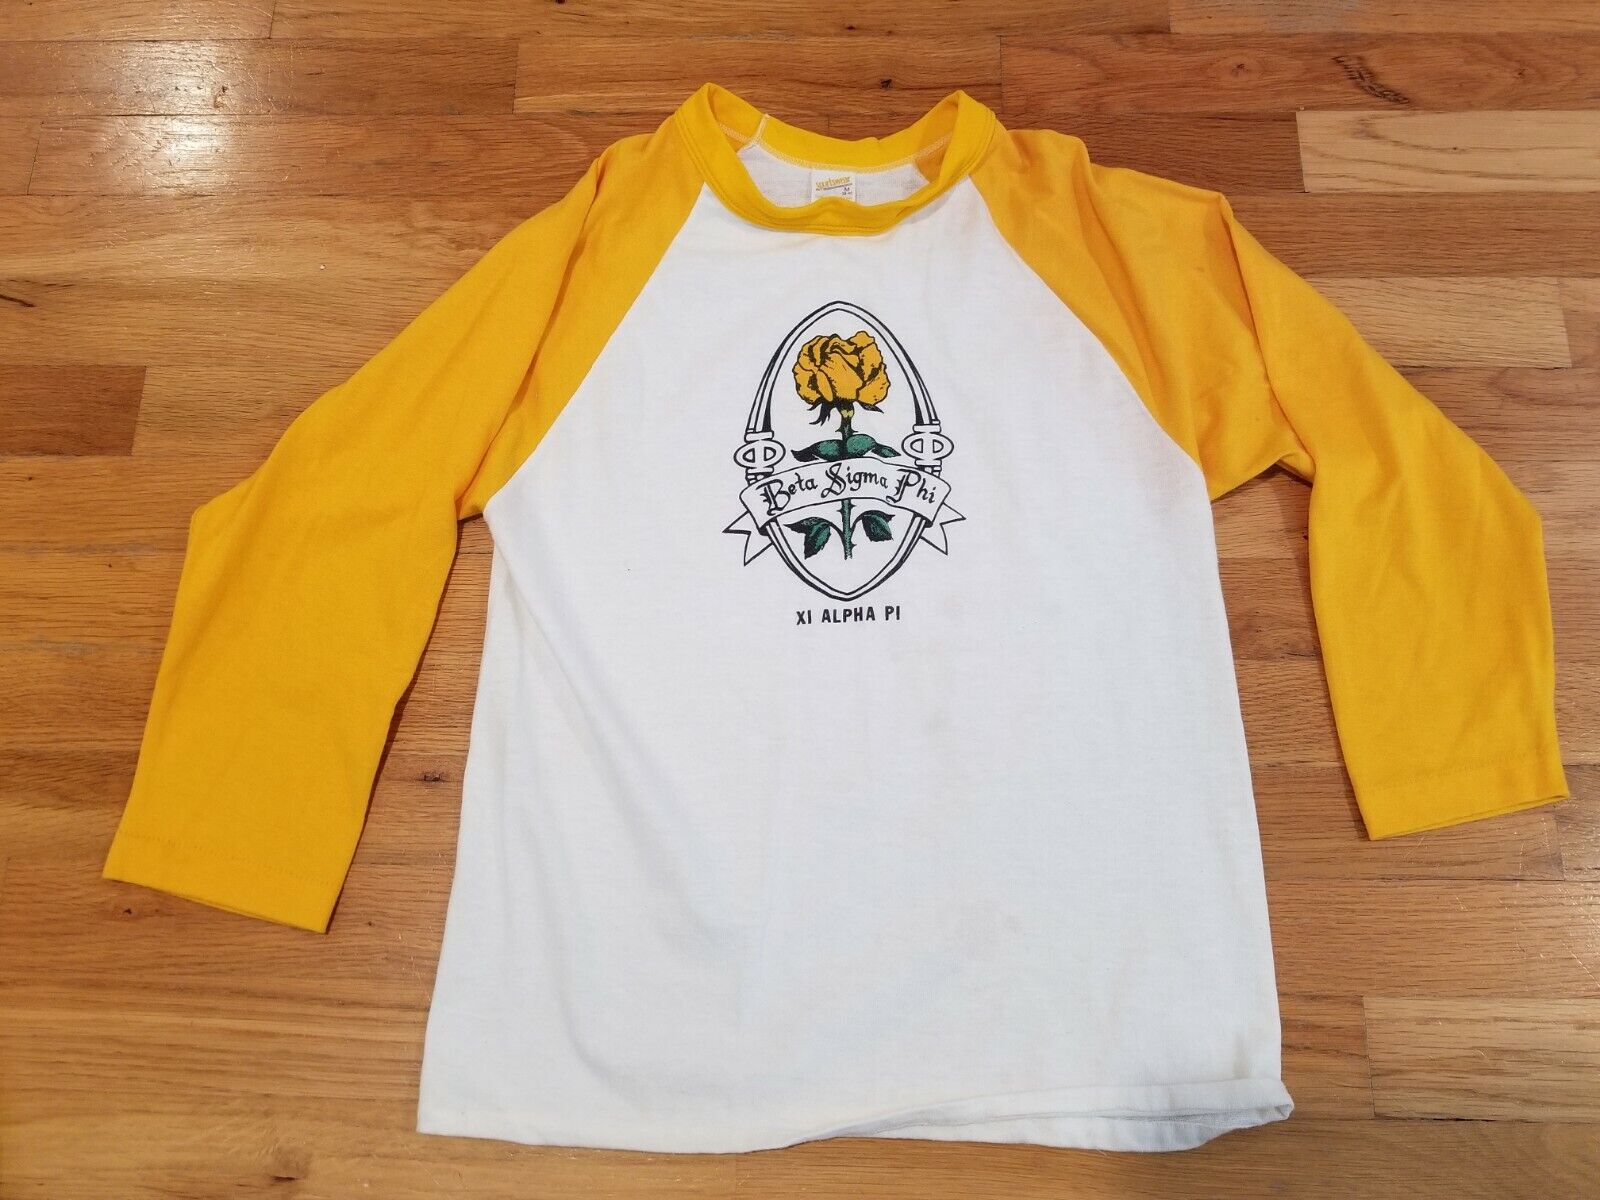 Vintage Beta Sigma Phi tshirt MADE IN USA size M medium (38-40) white yellow